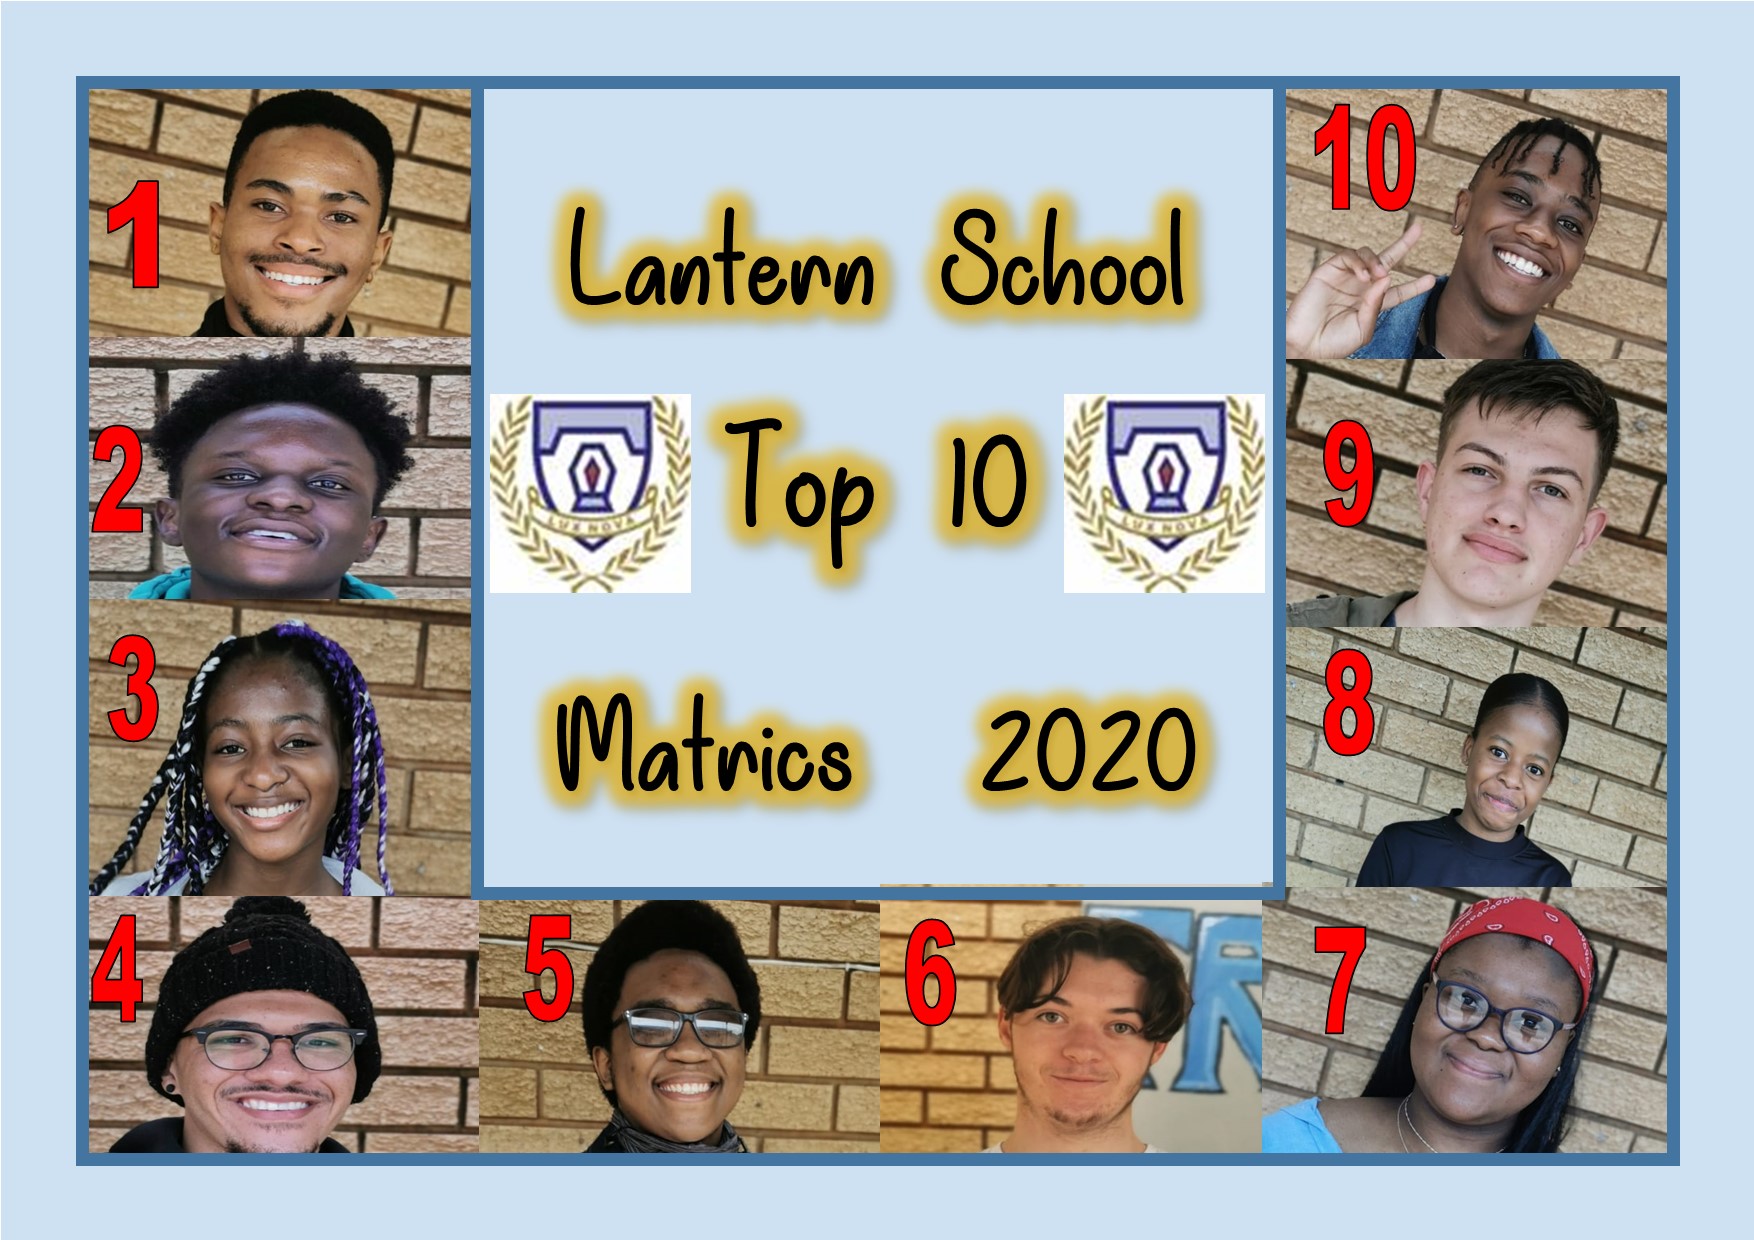 Lantern School Top 10 Matrics 2020